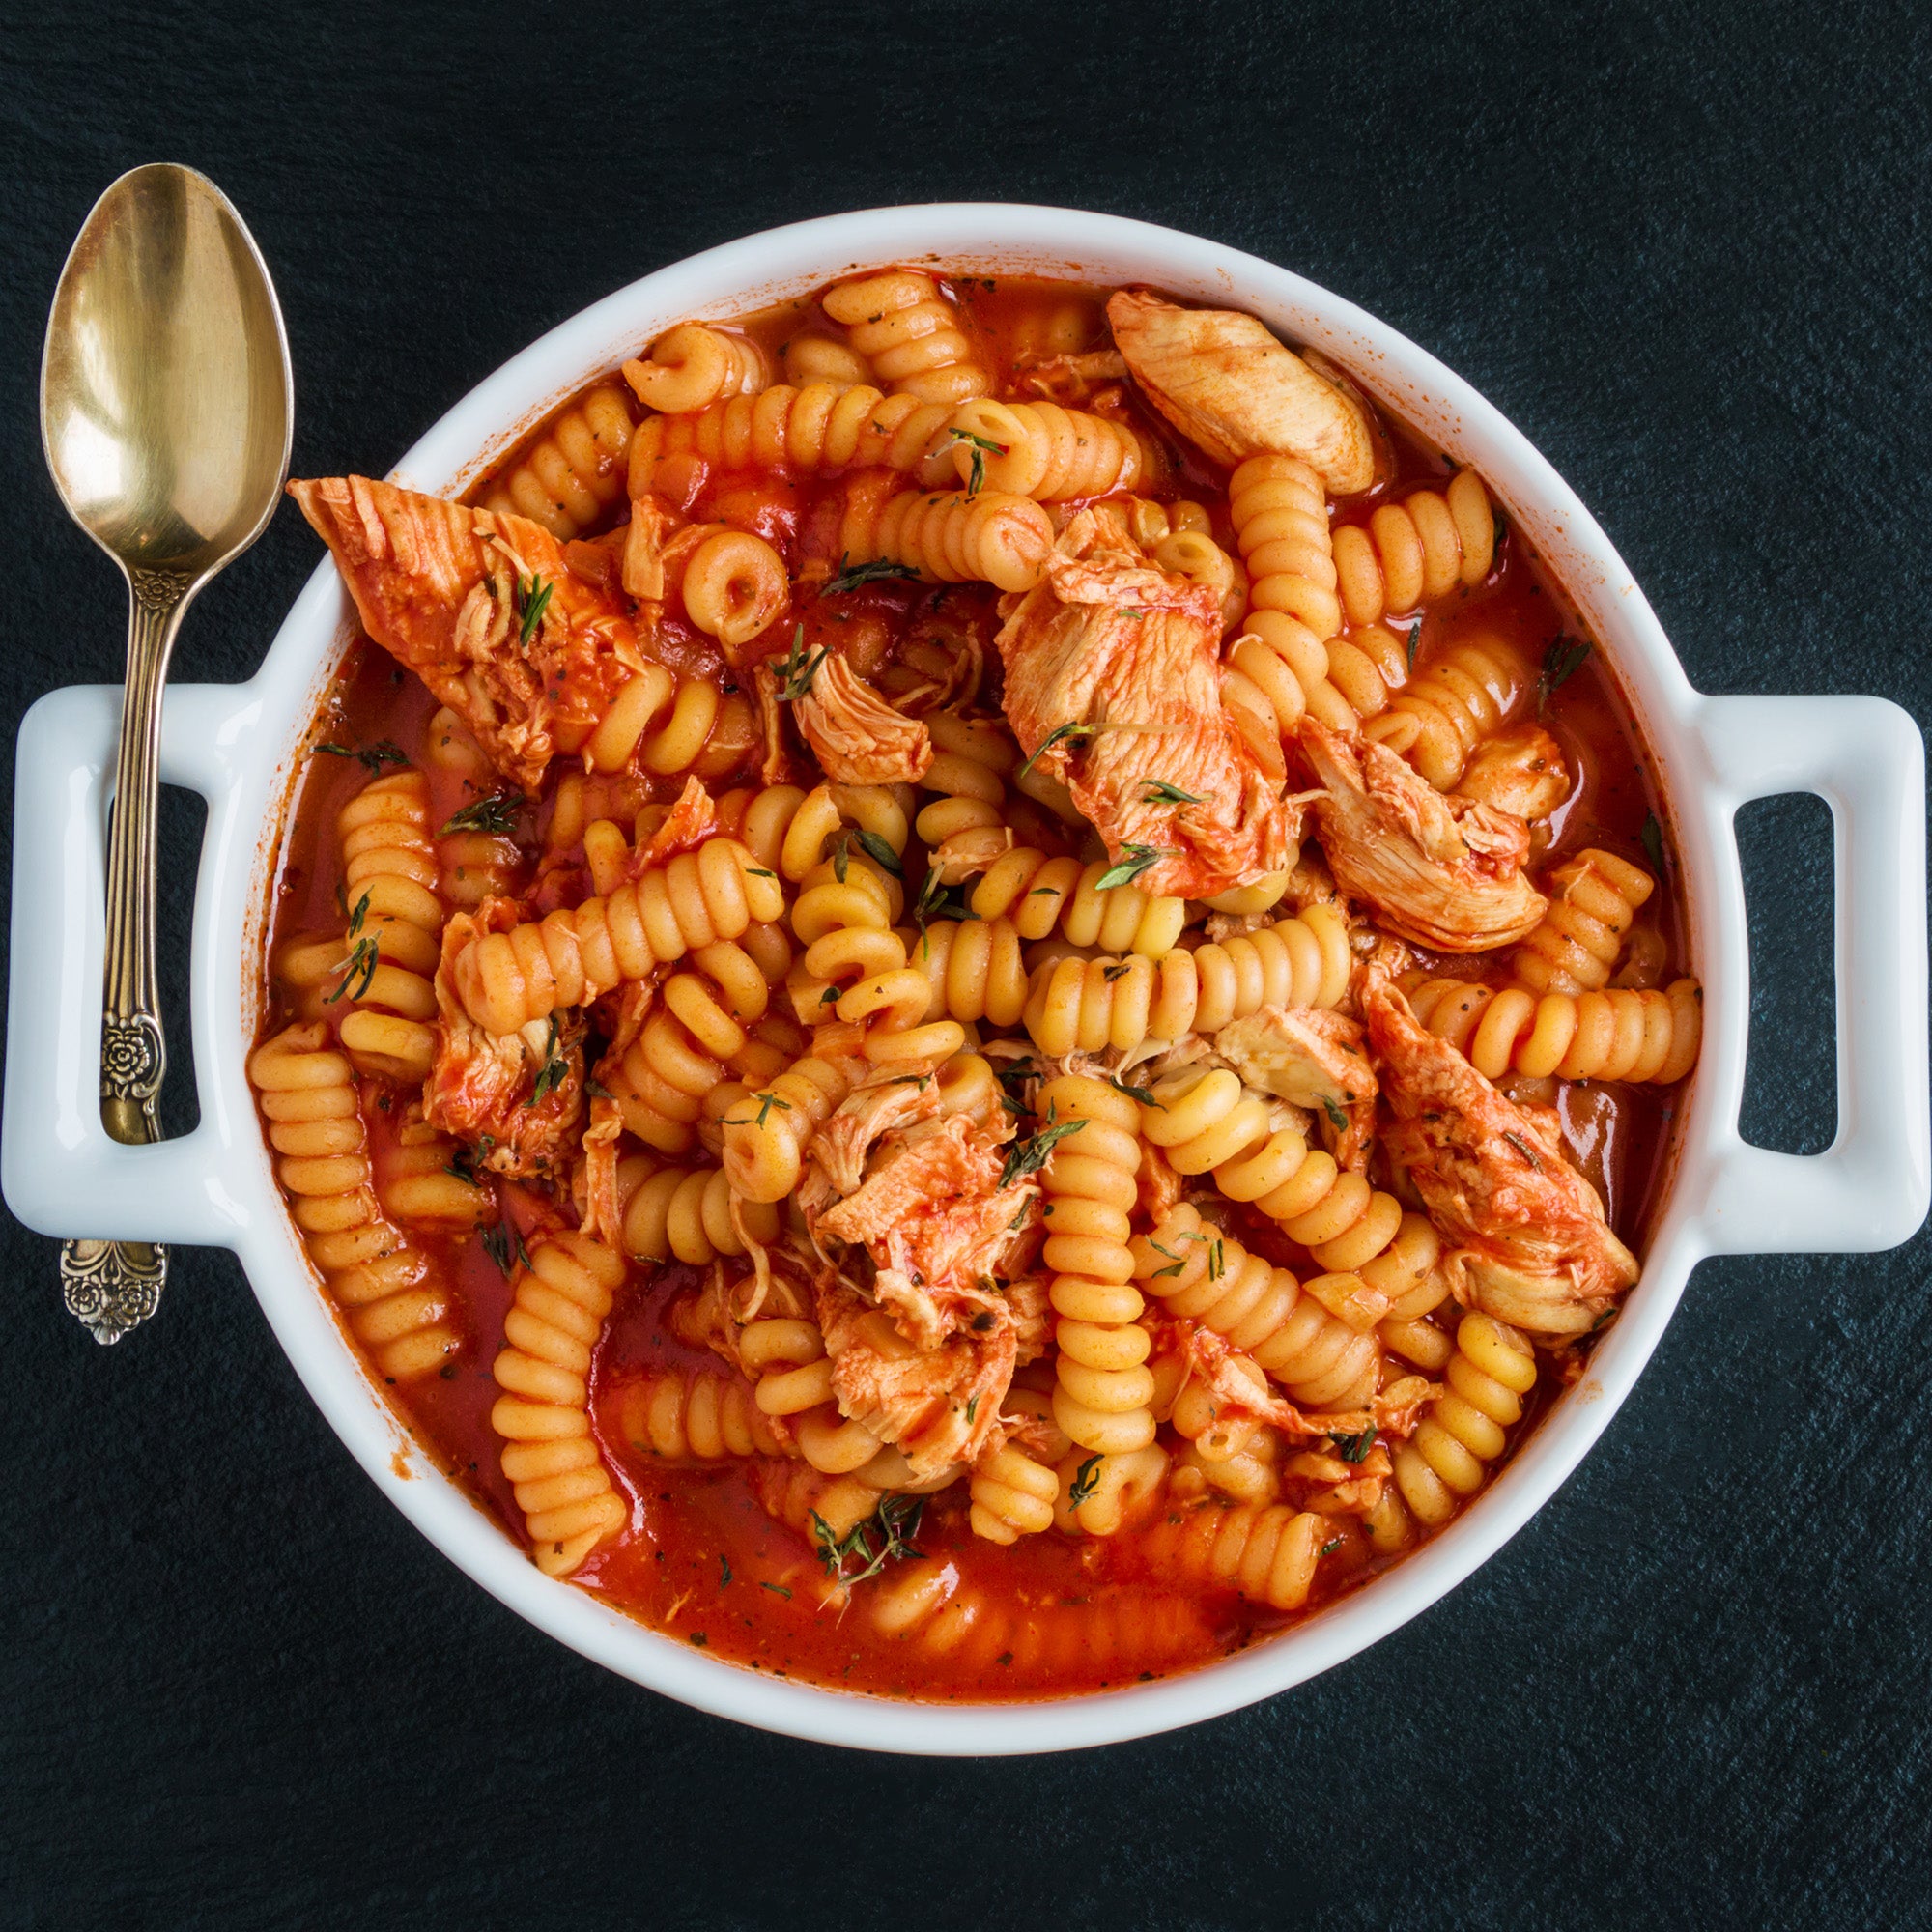 Claremont Spice and Dry Goods – Italian seasoning – no salt